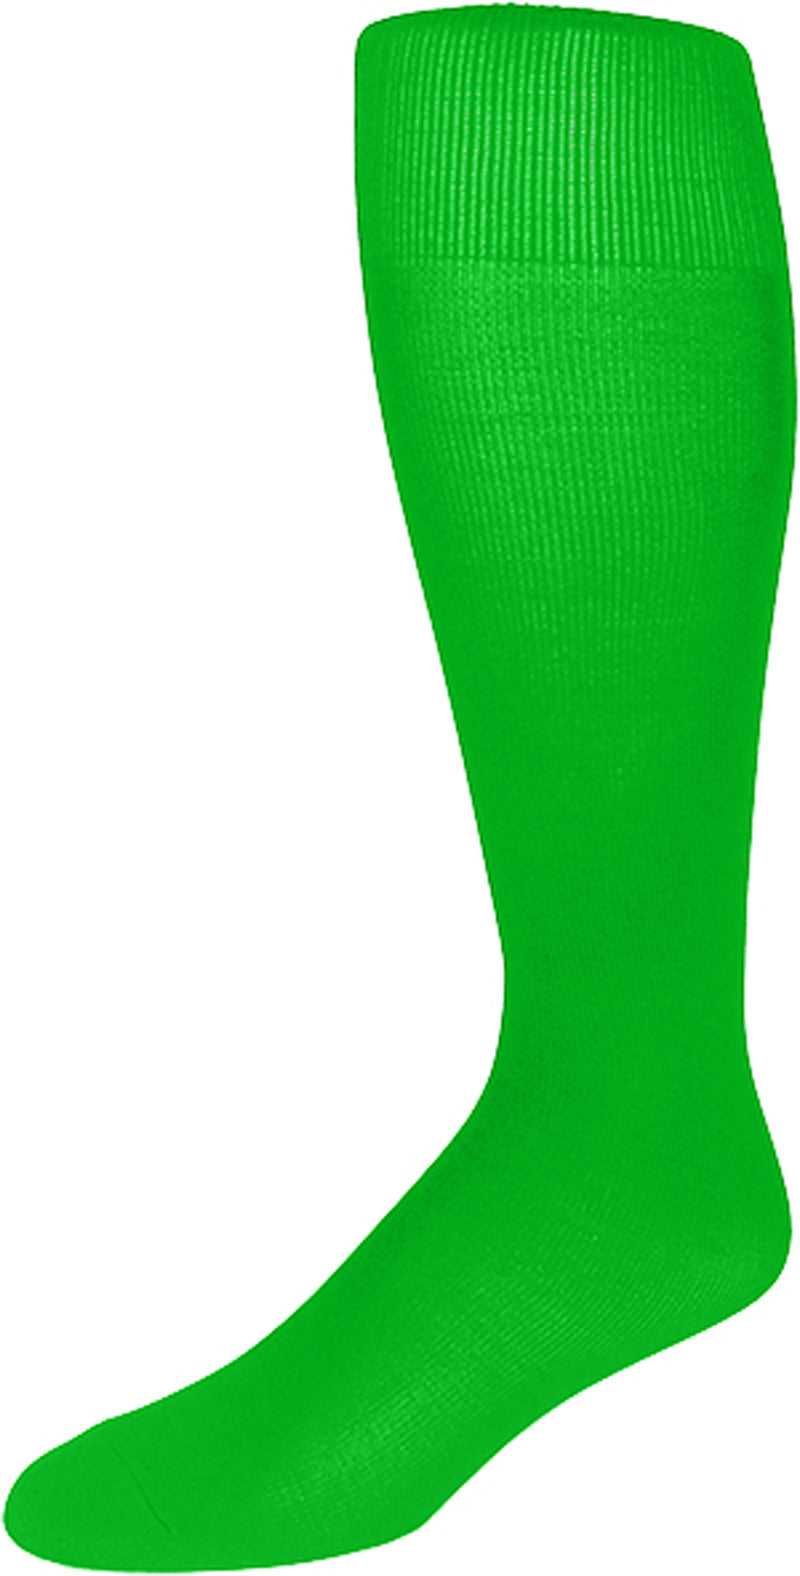 Pearsox Ultralite Knee High Socks - Neon Green - HIT a Double